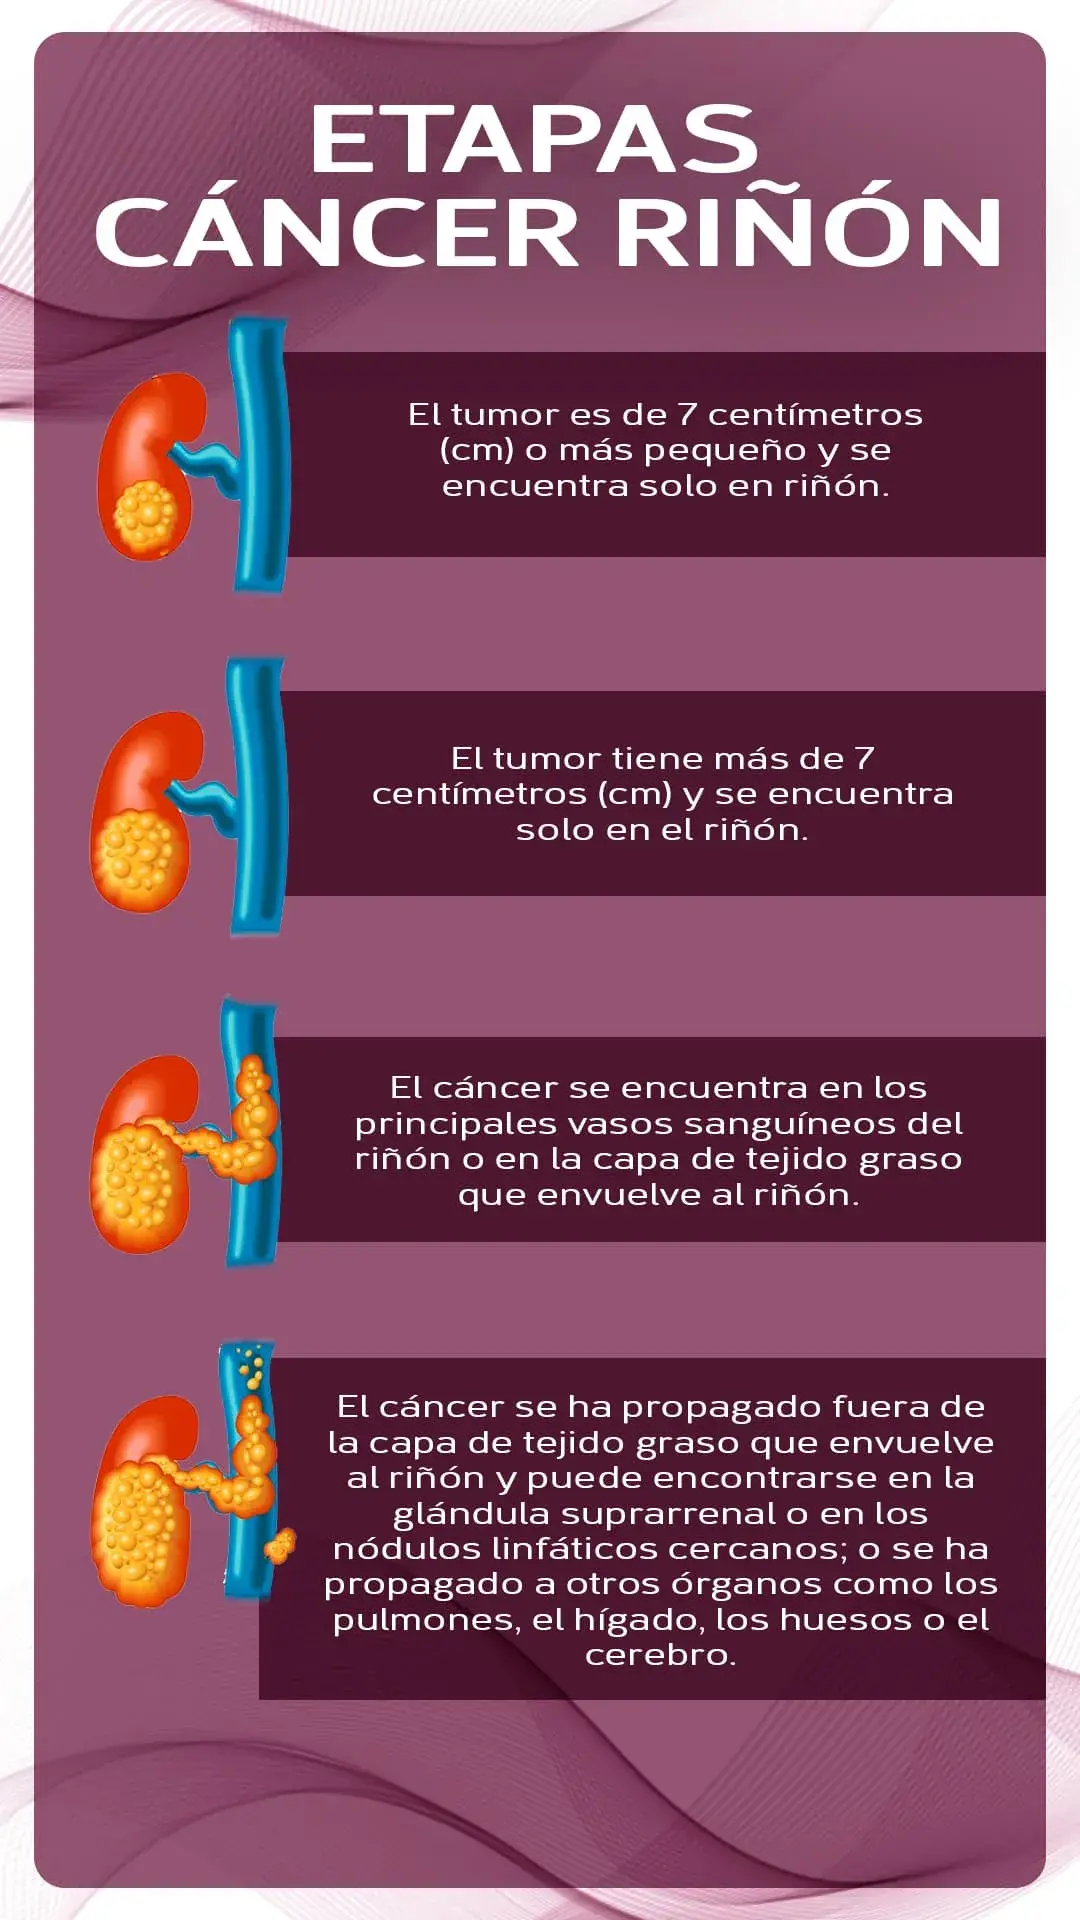 Las etapas del cáncer de riñon (I,II, III, IV)